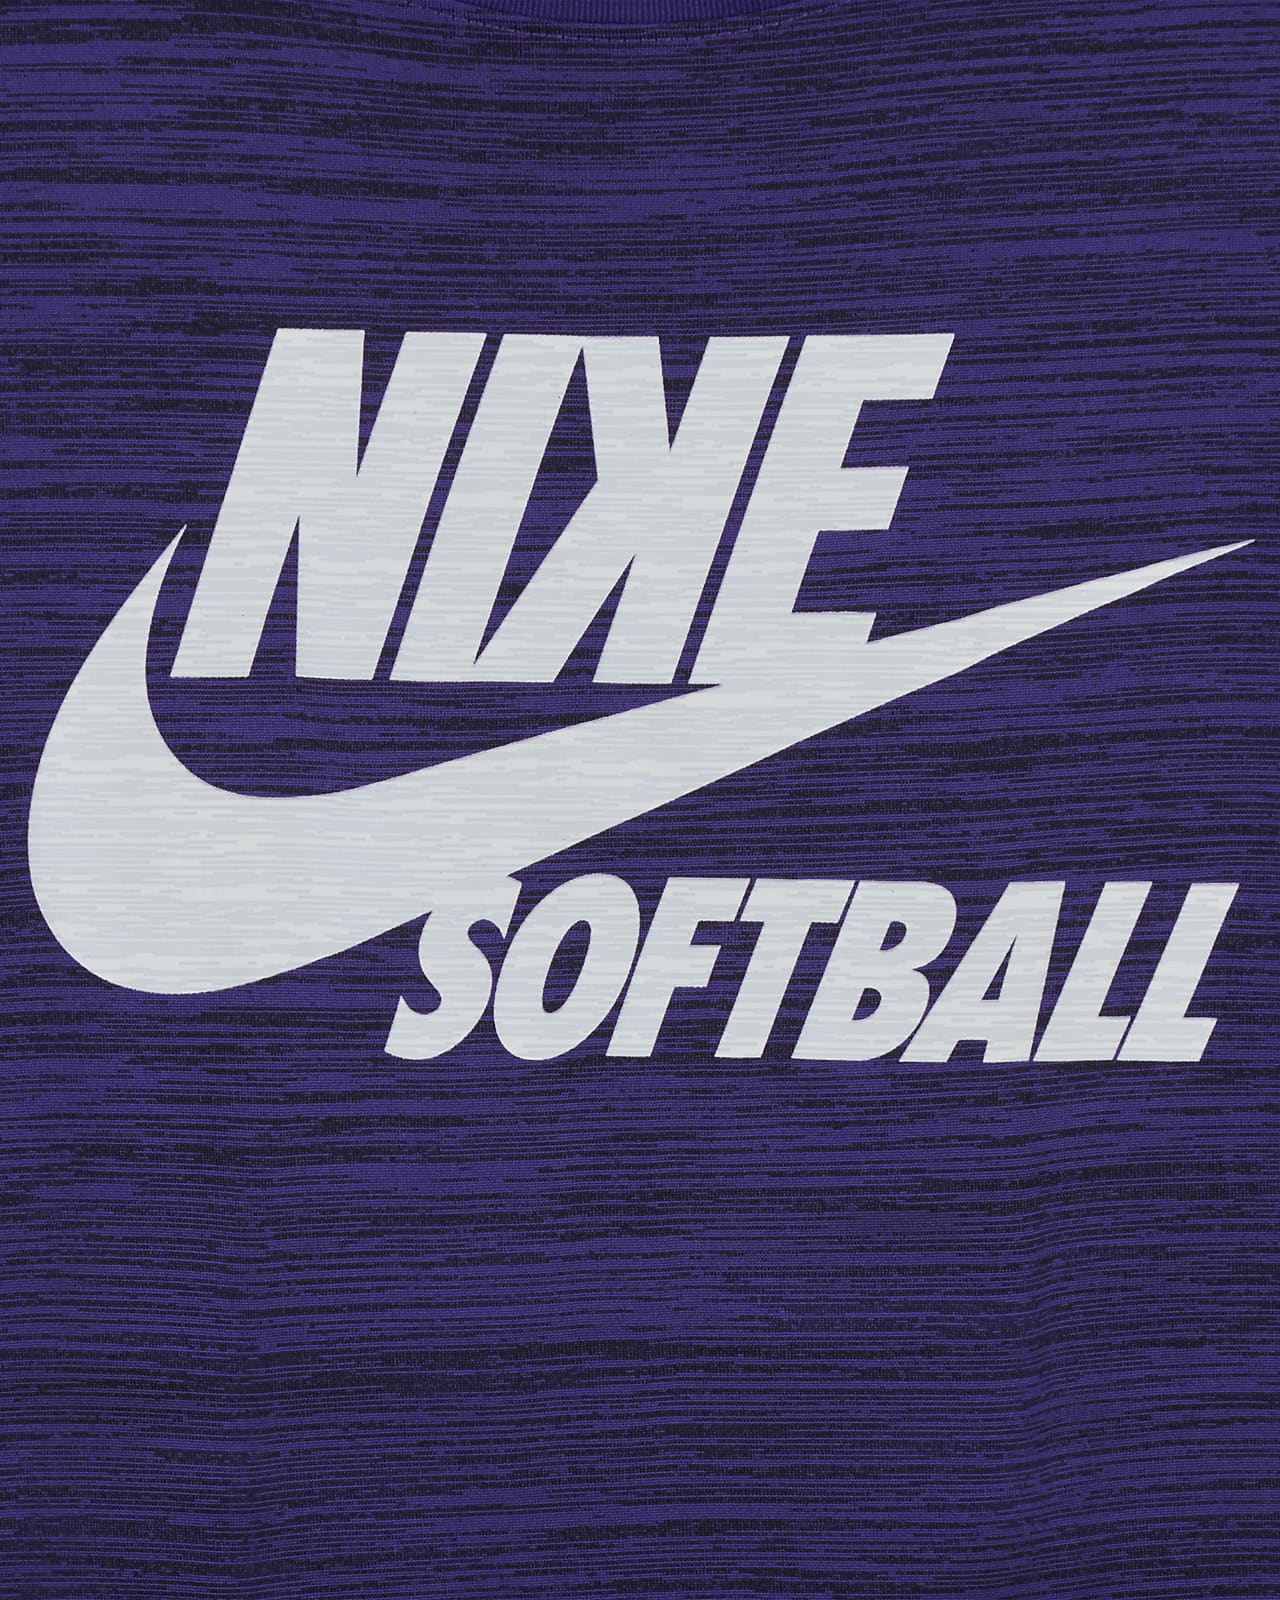 Nike Women's Softball T-Shirt. Nike.com